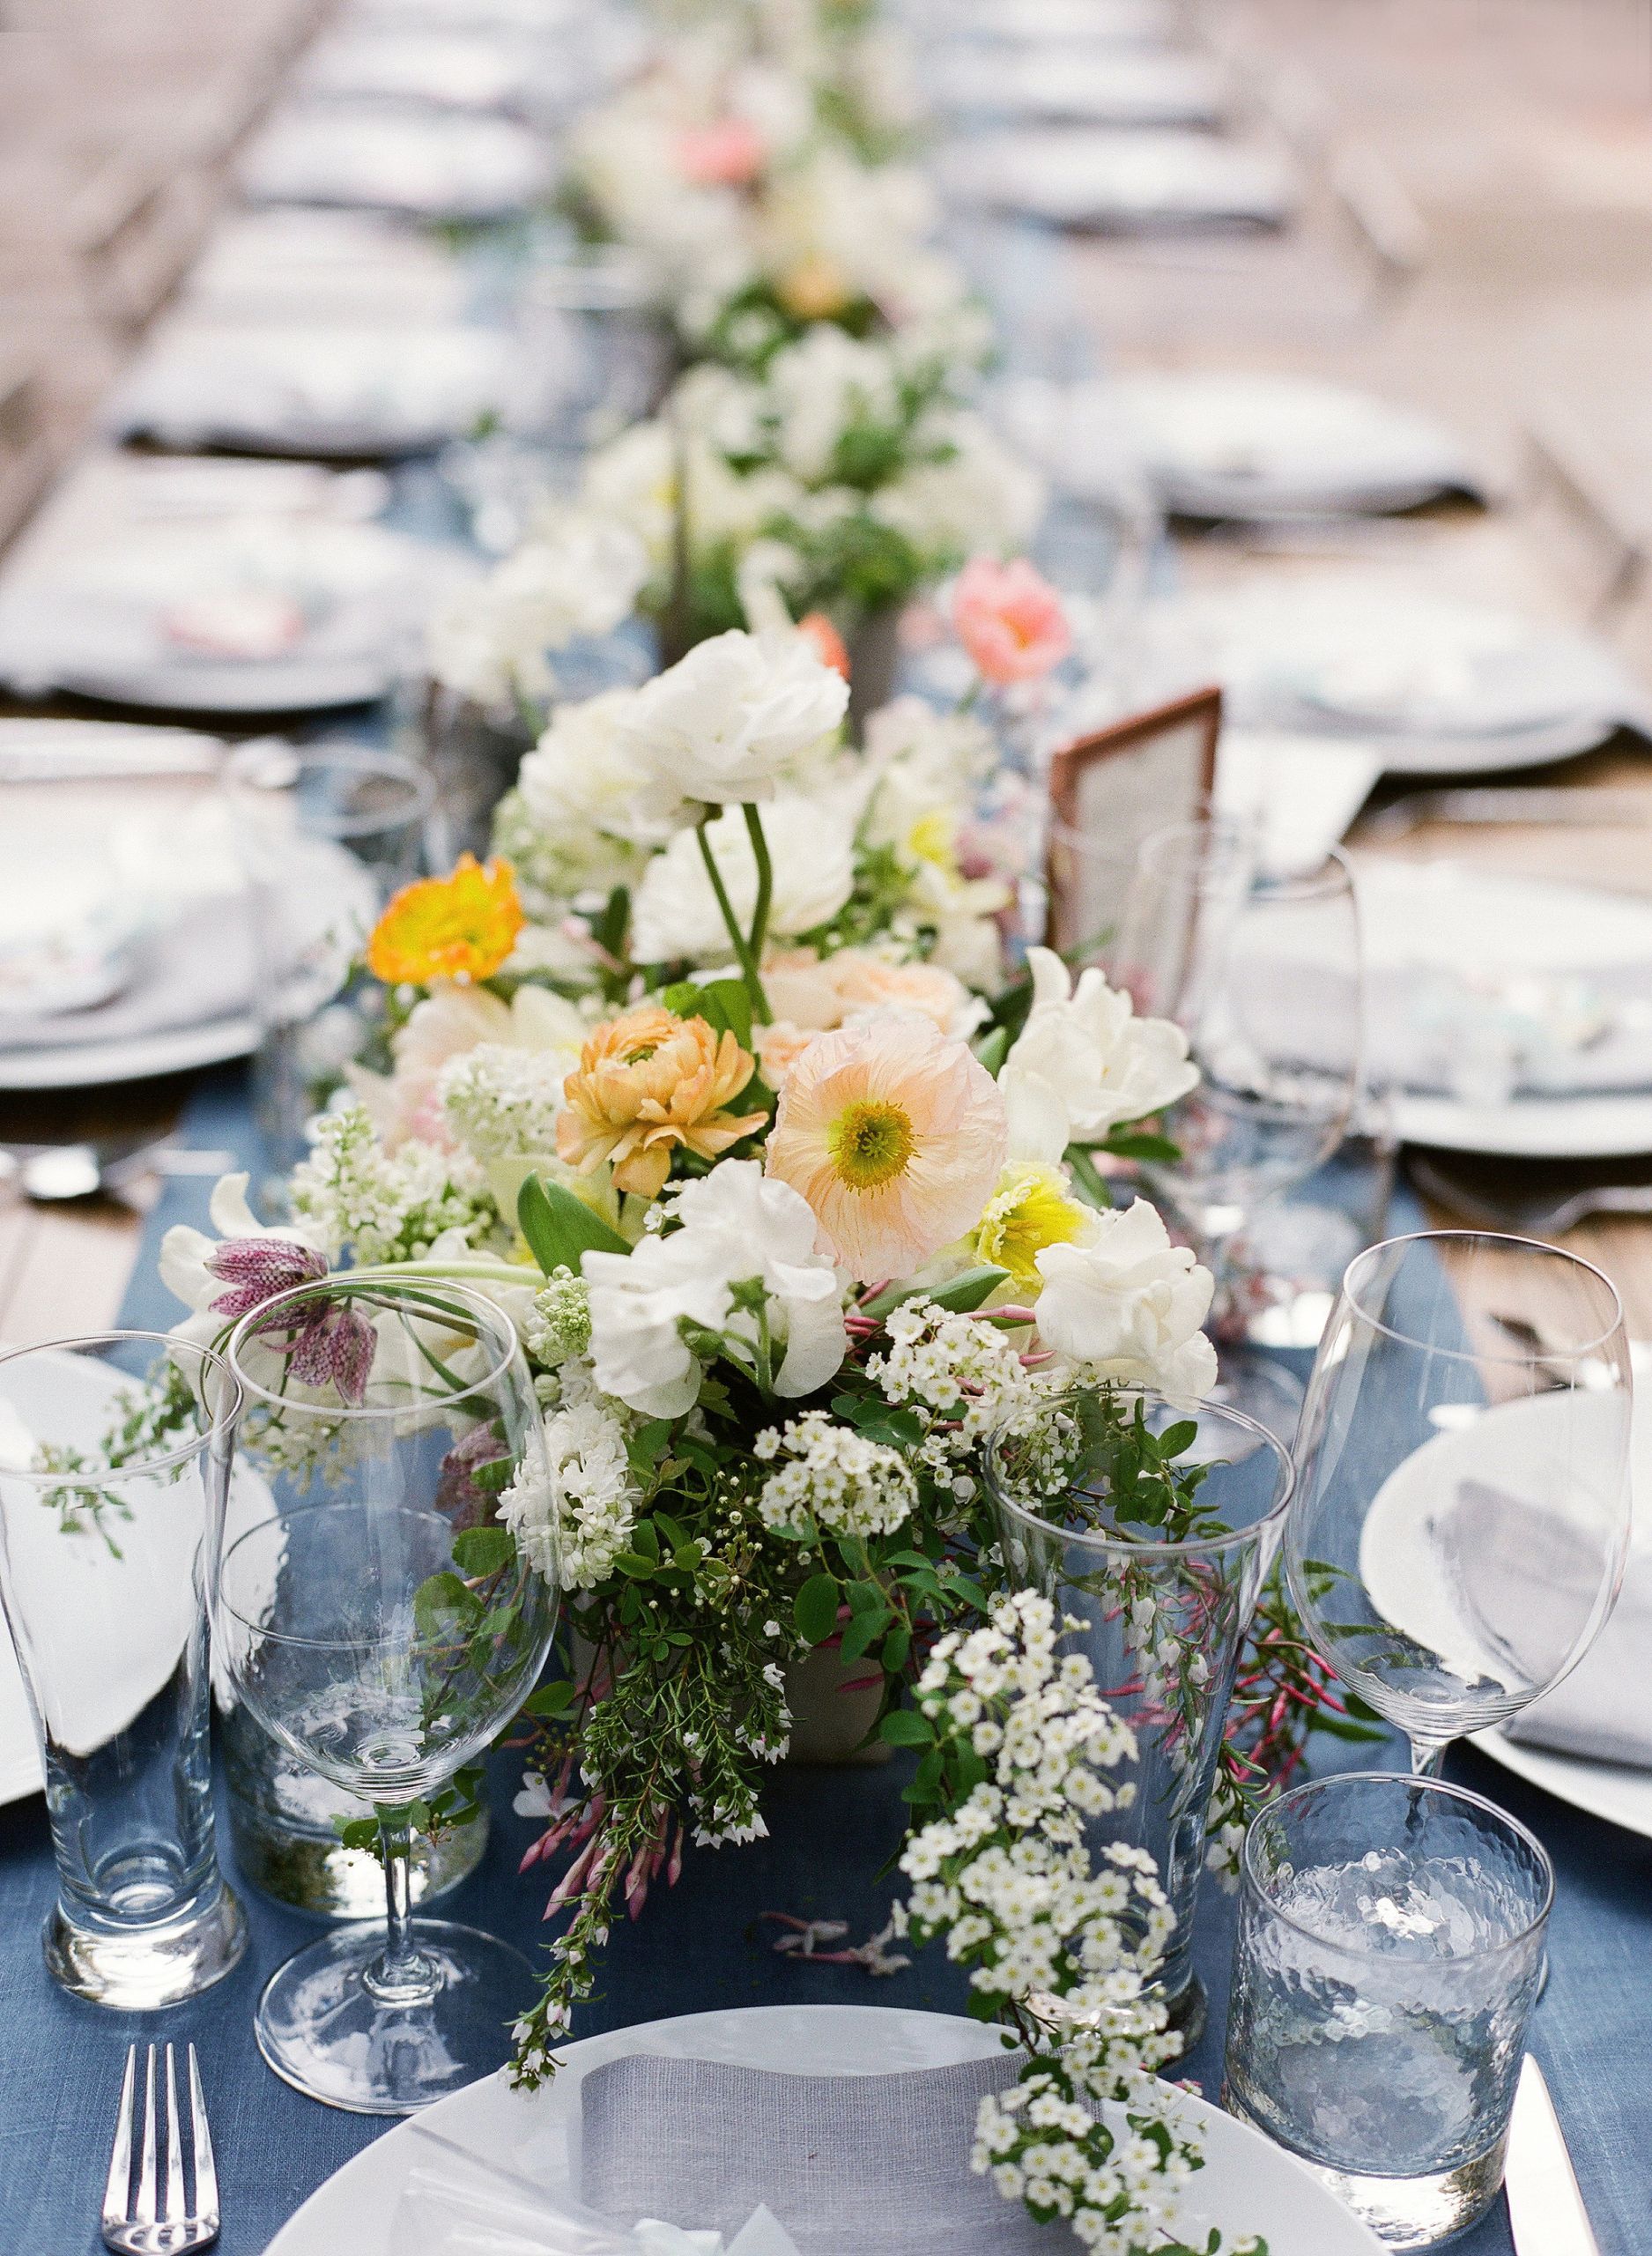 Wedding Flower Designs
 40 of Our Favorite Floral Wedding Centerpieces